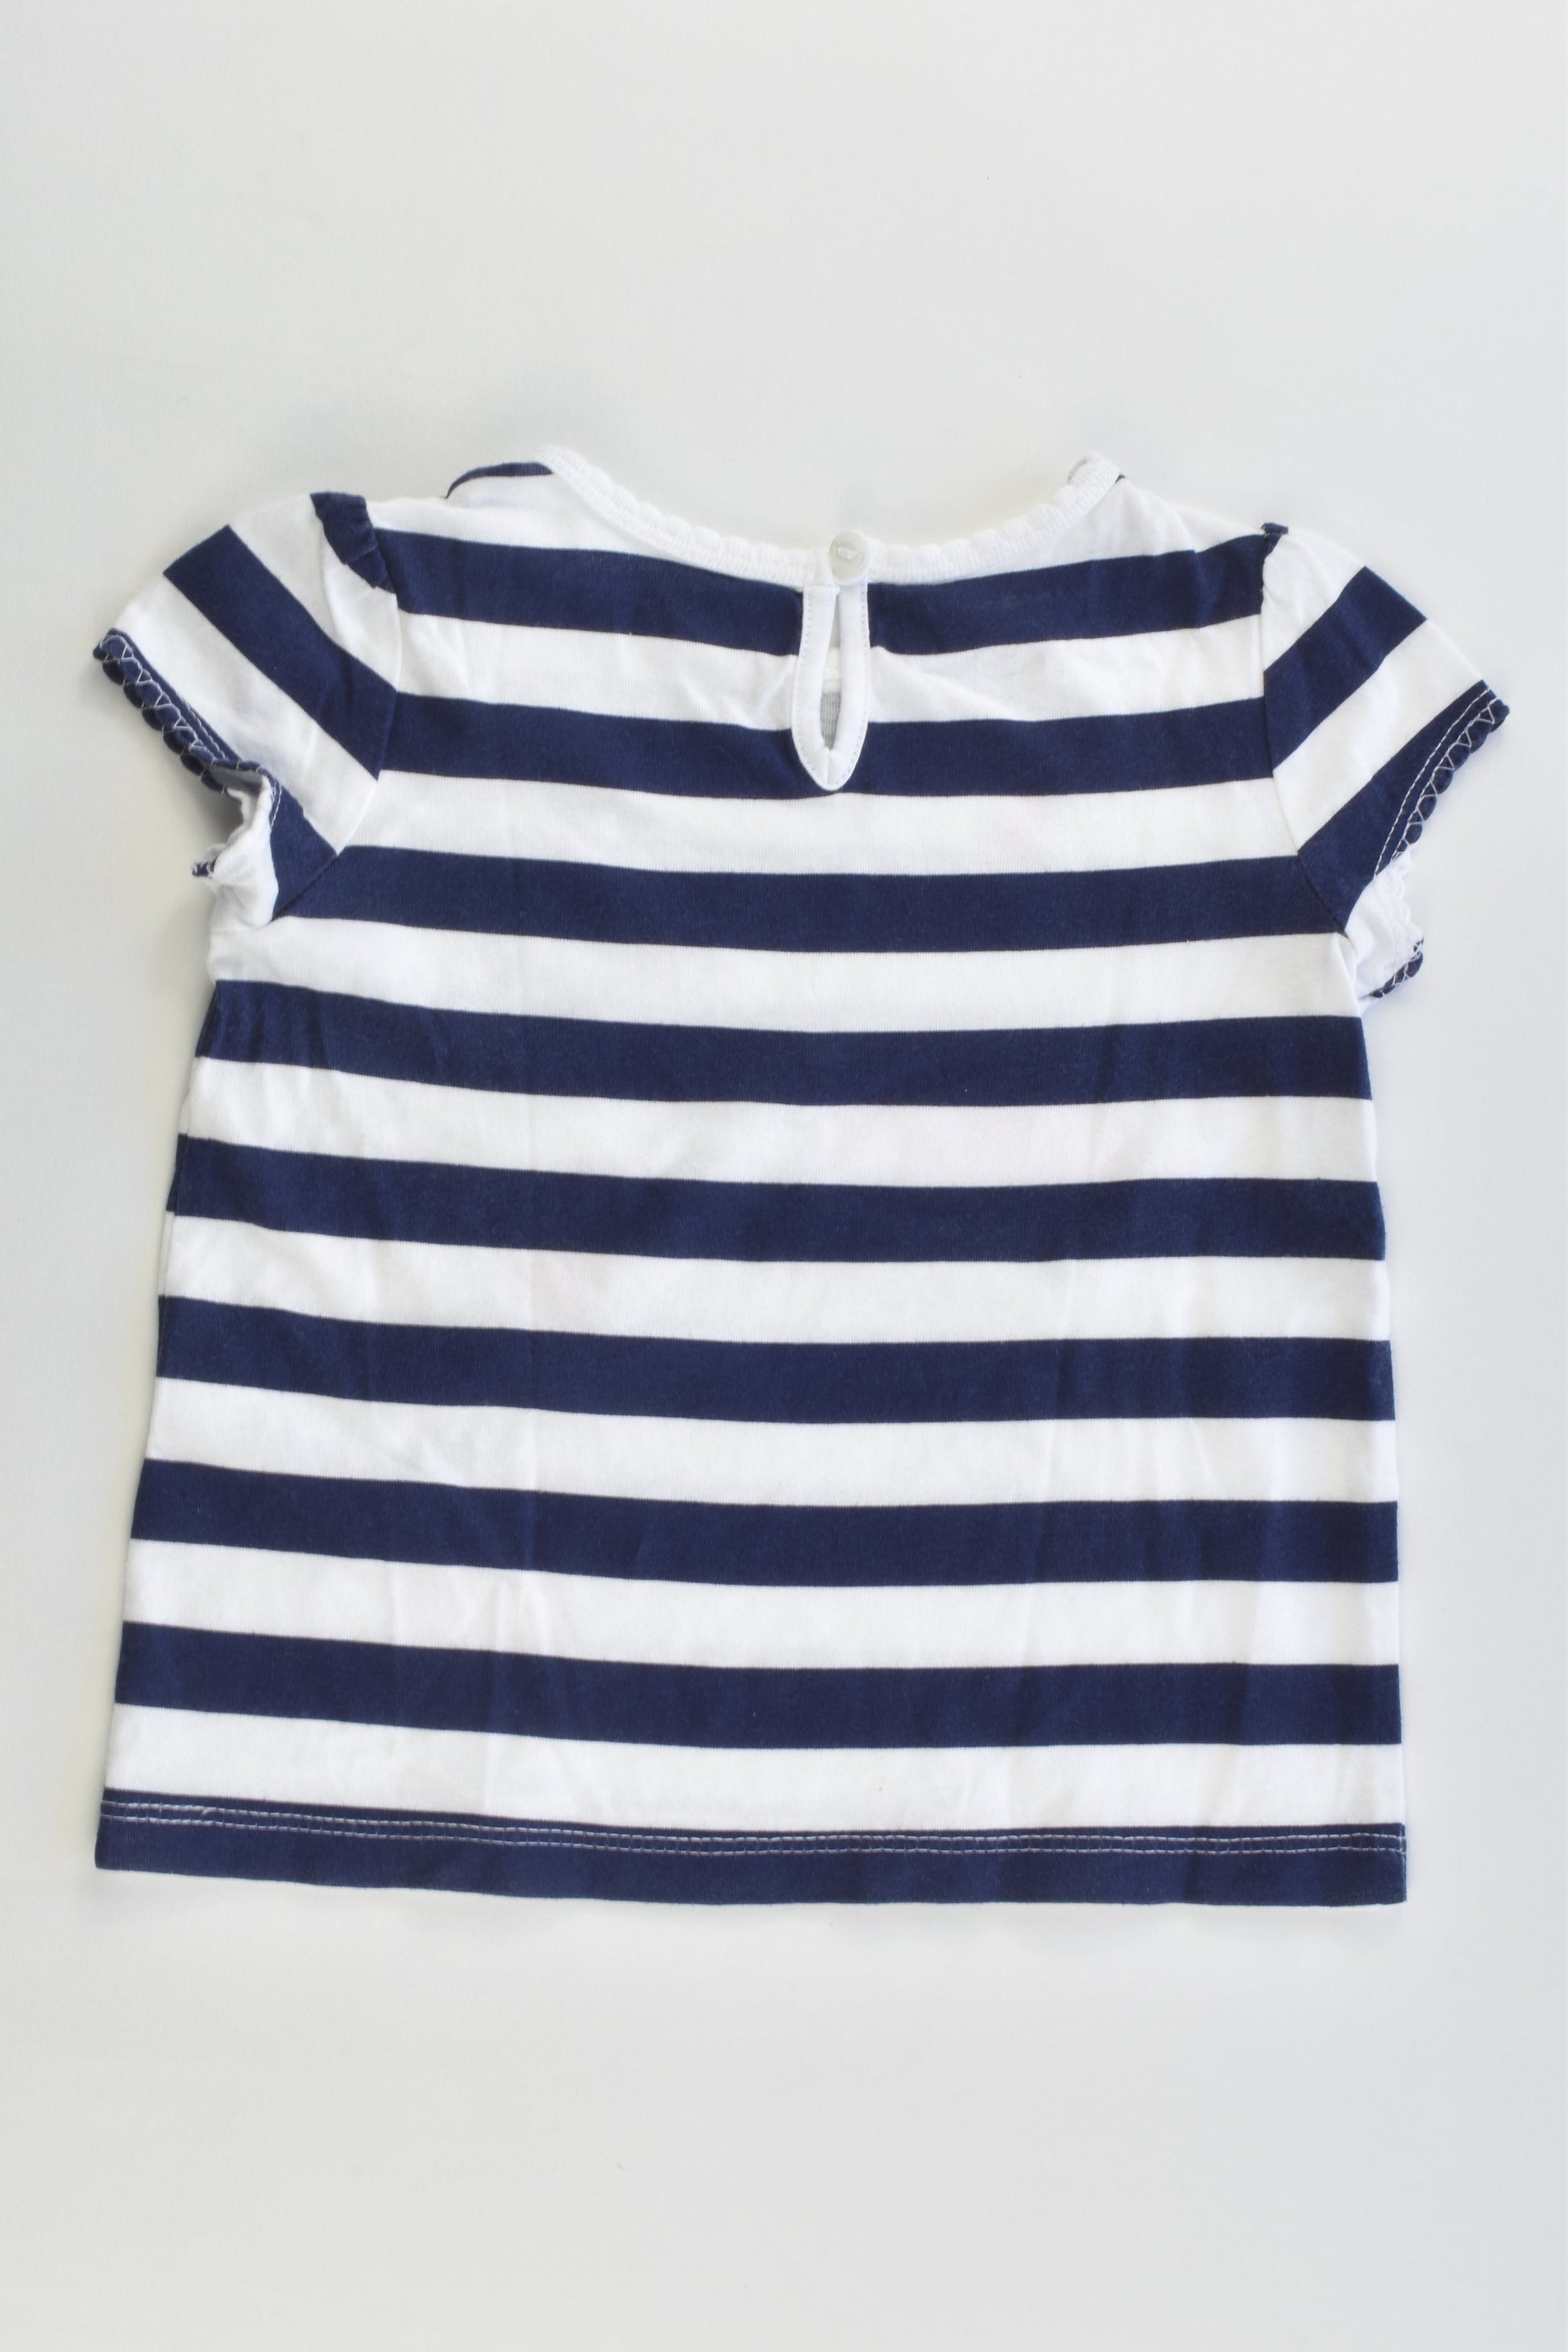 Tommy Hilfiger Size 1 (18 months) Striped T-shirt